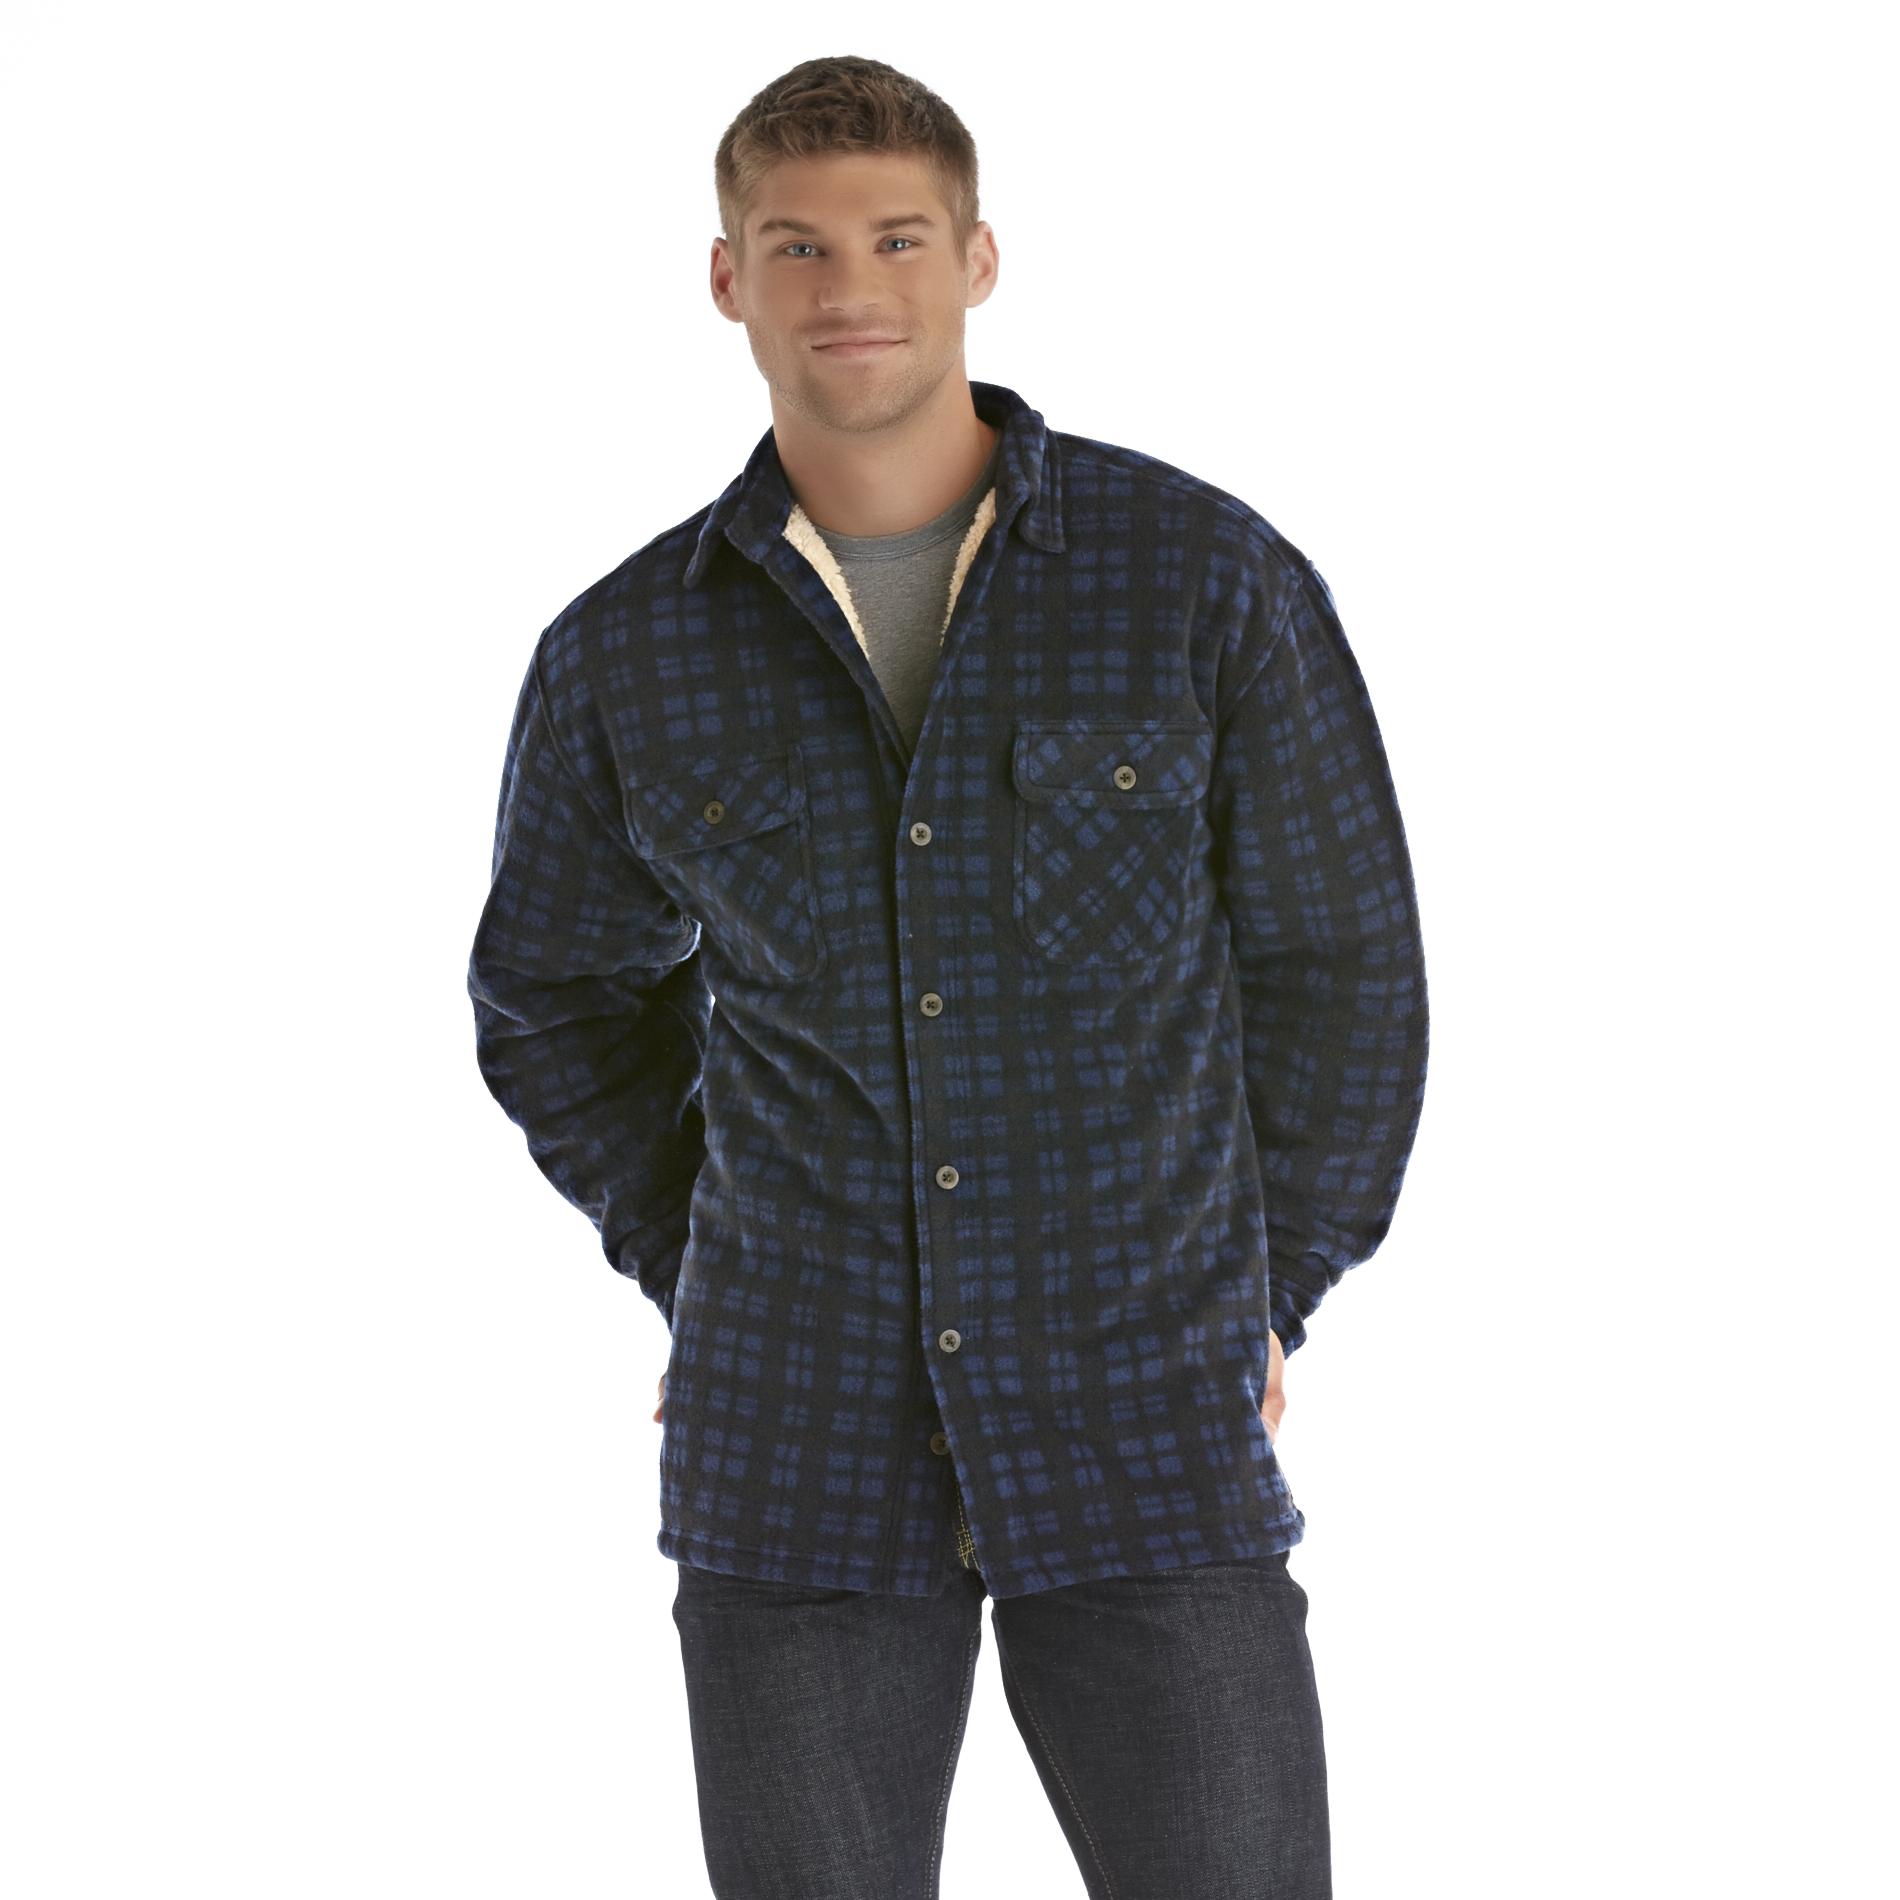 Basic Editions Men's Fleece Shirt Jacket - Windowpane Plaid